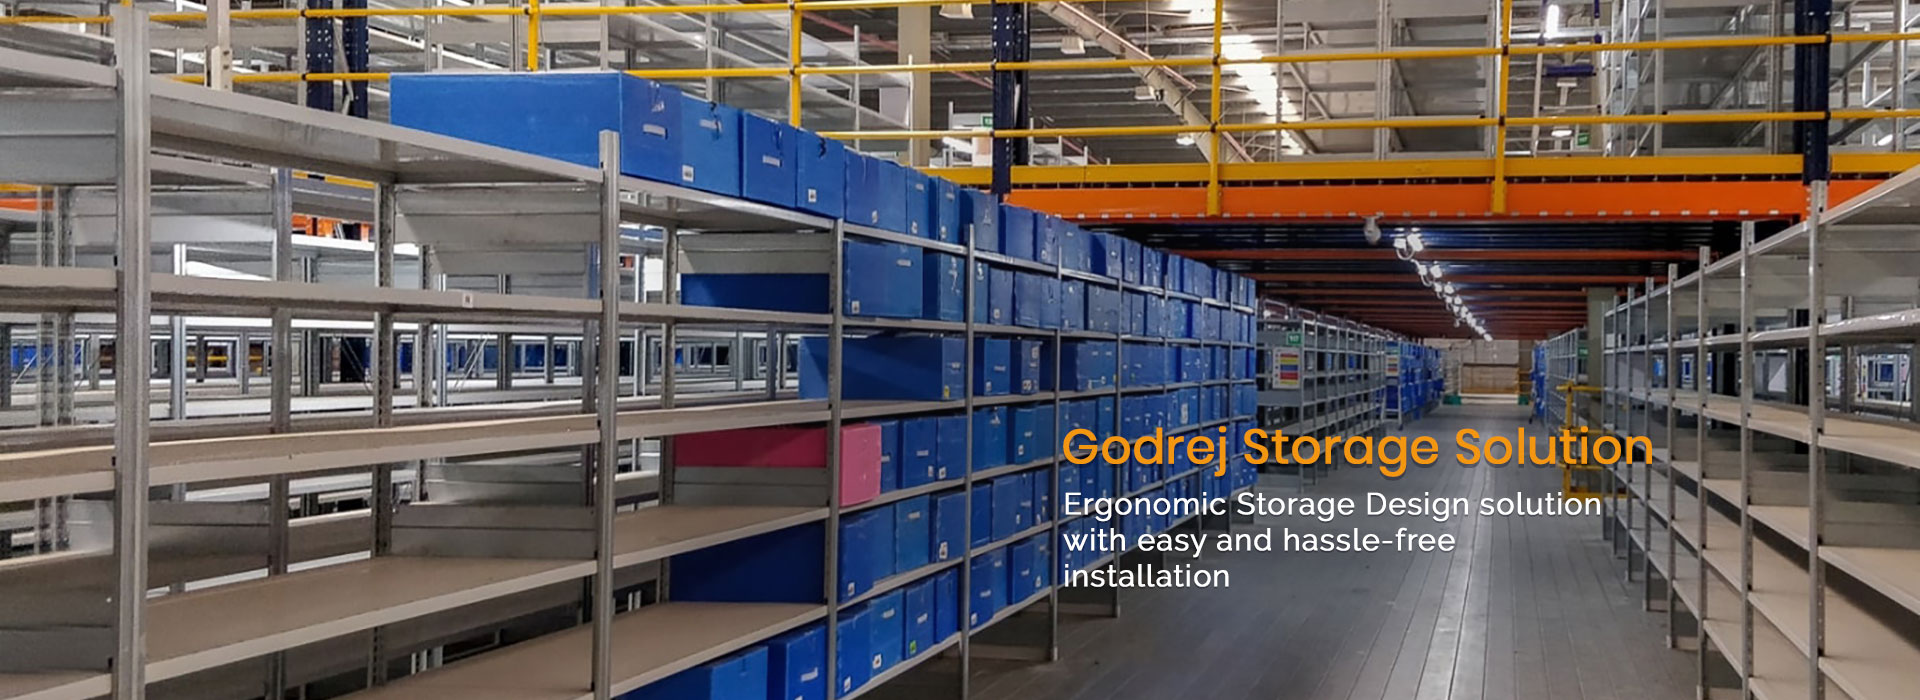 Godrej Storage Solutions in Cgo Complex